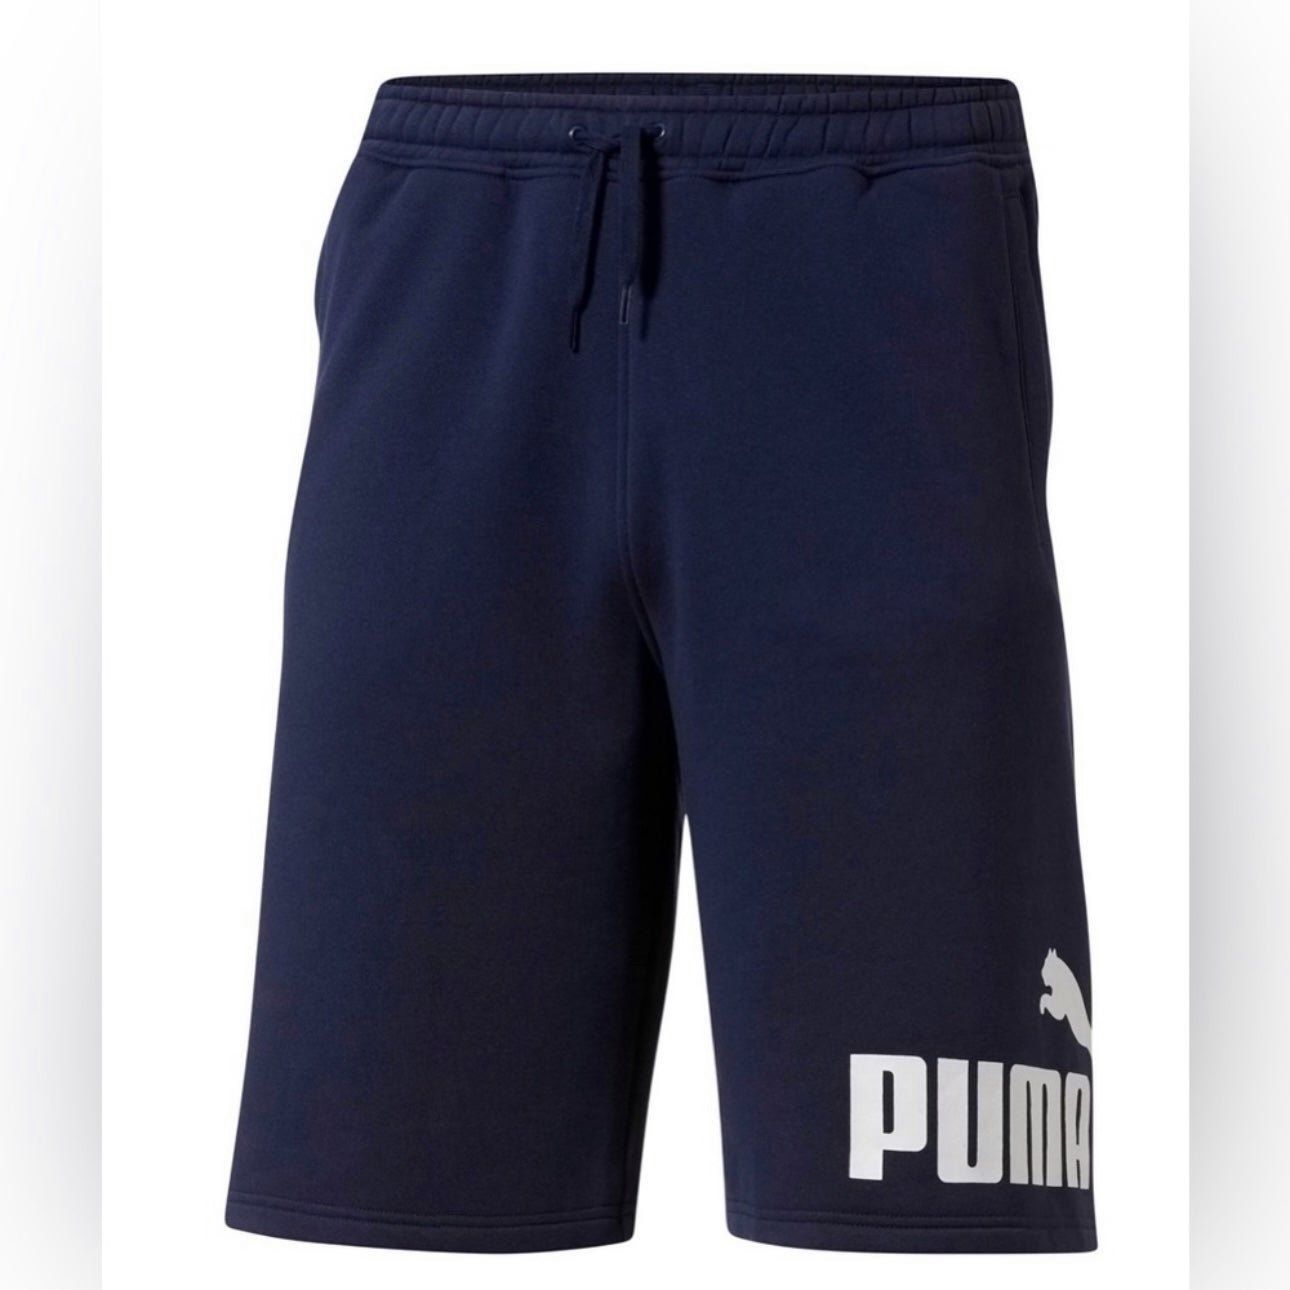 Puma Navy Blue Shorts 